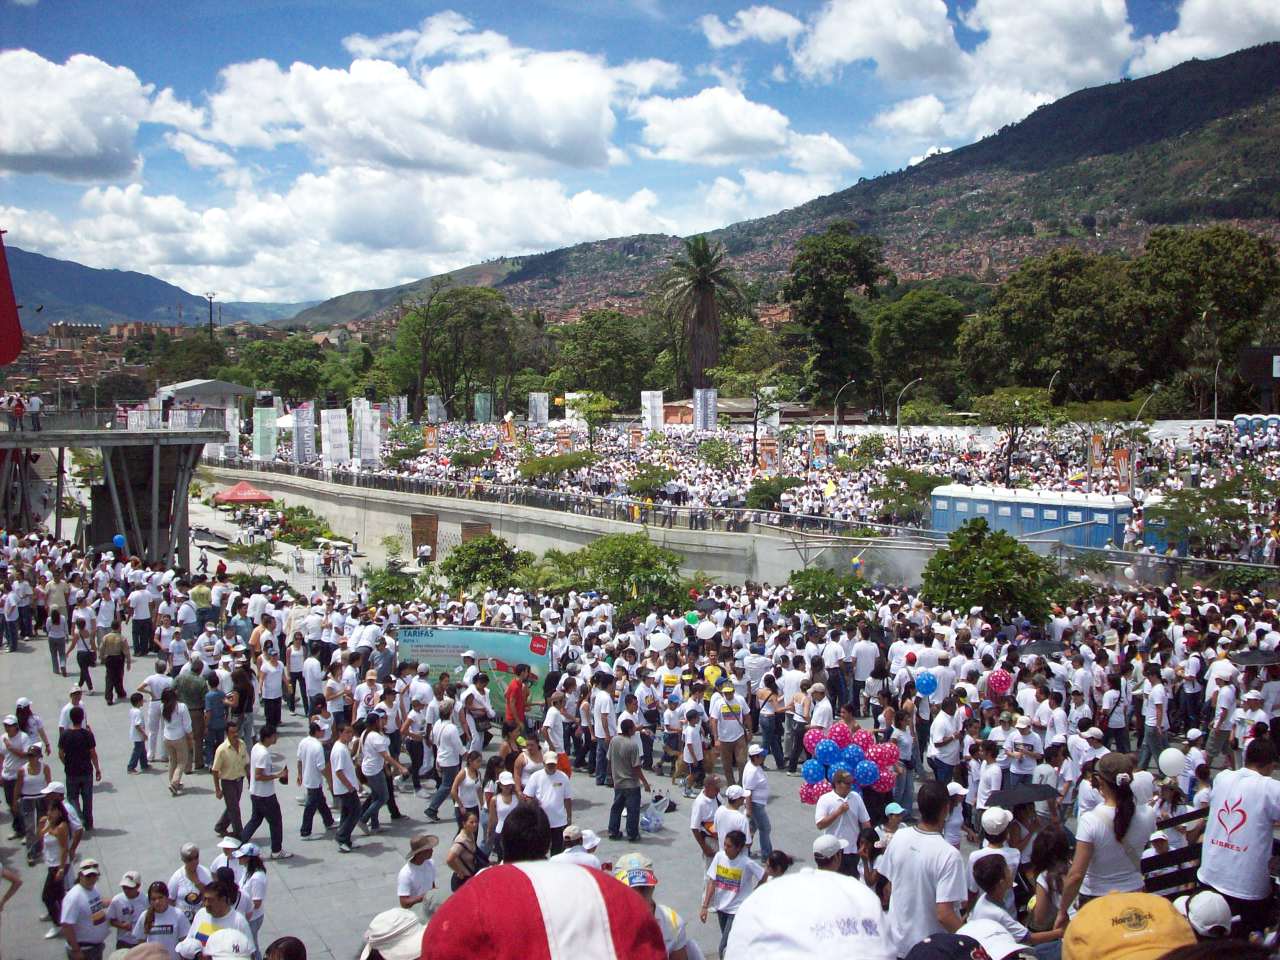 Foto: Marcha por la paz - Medellin (Antioquia), Colombia